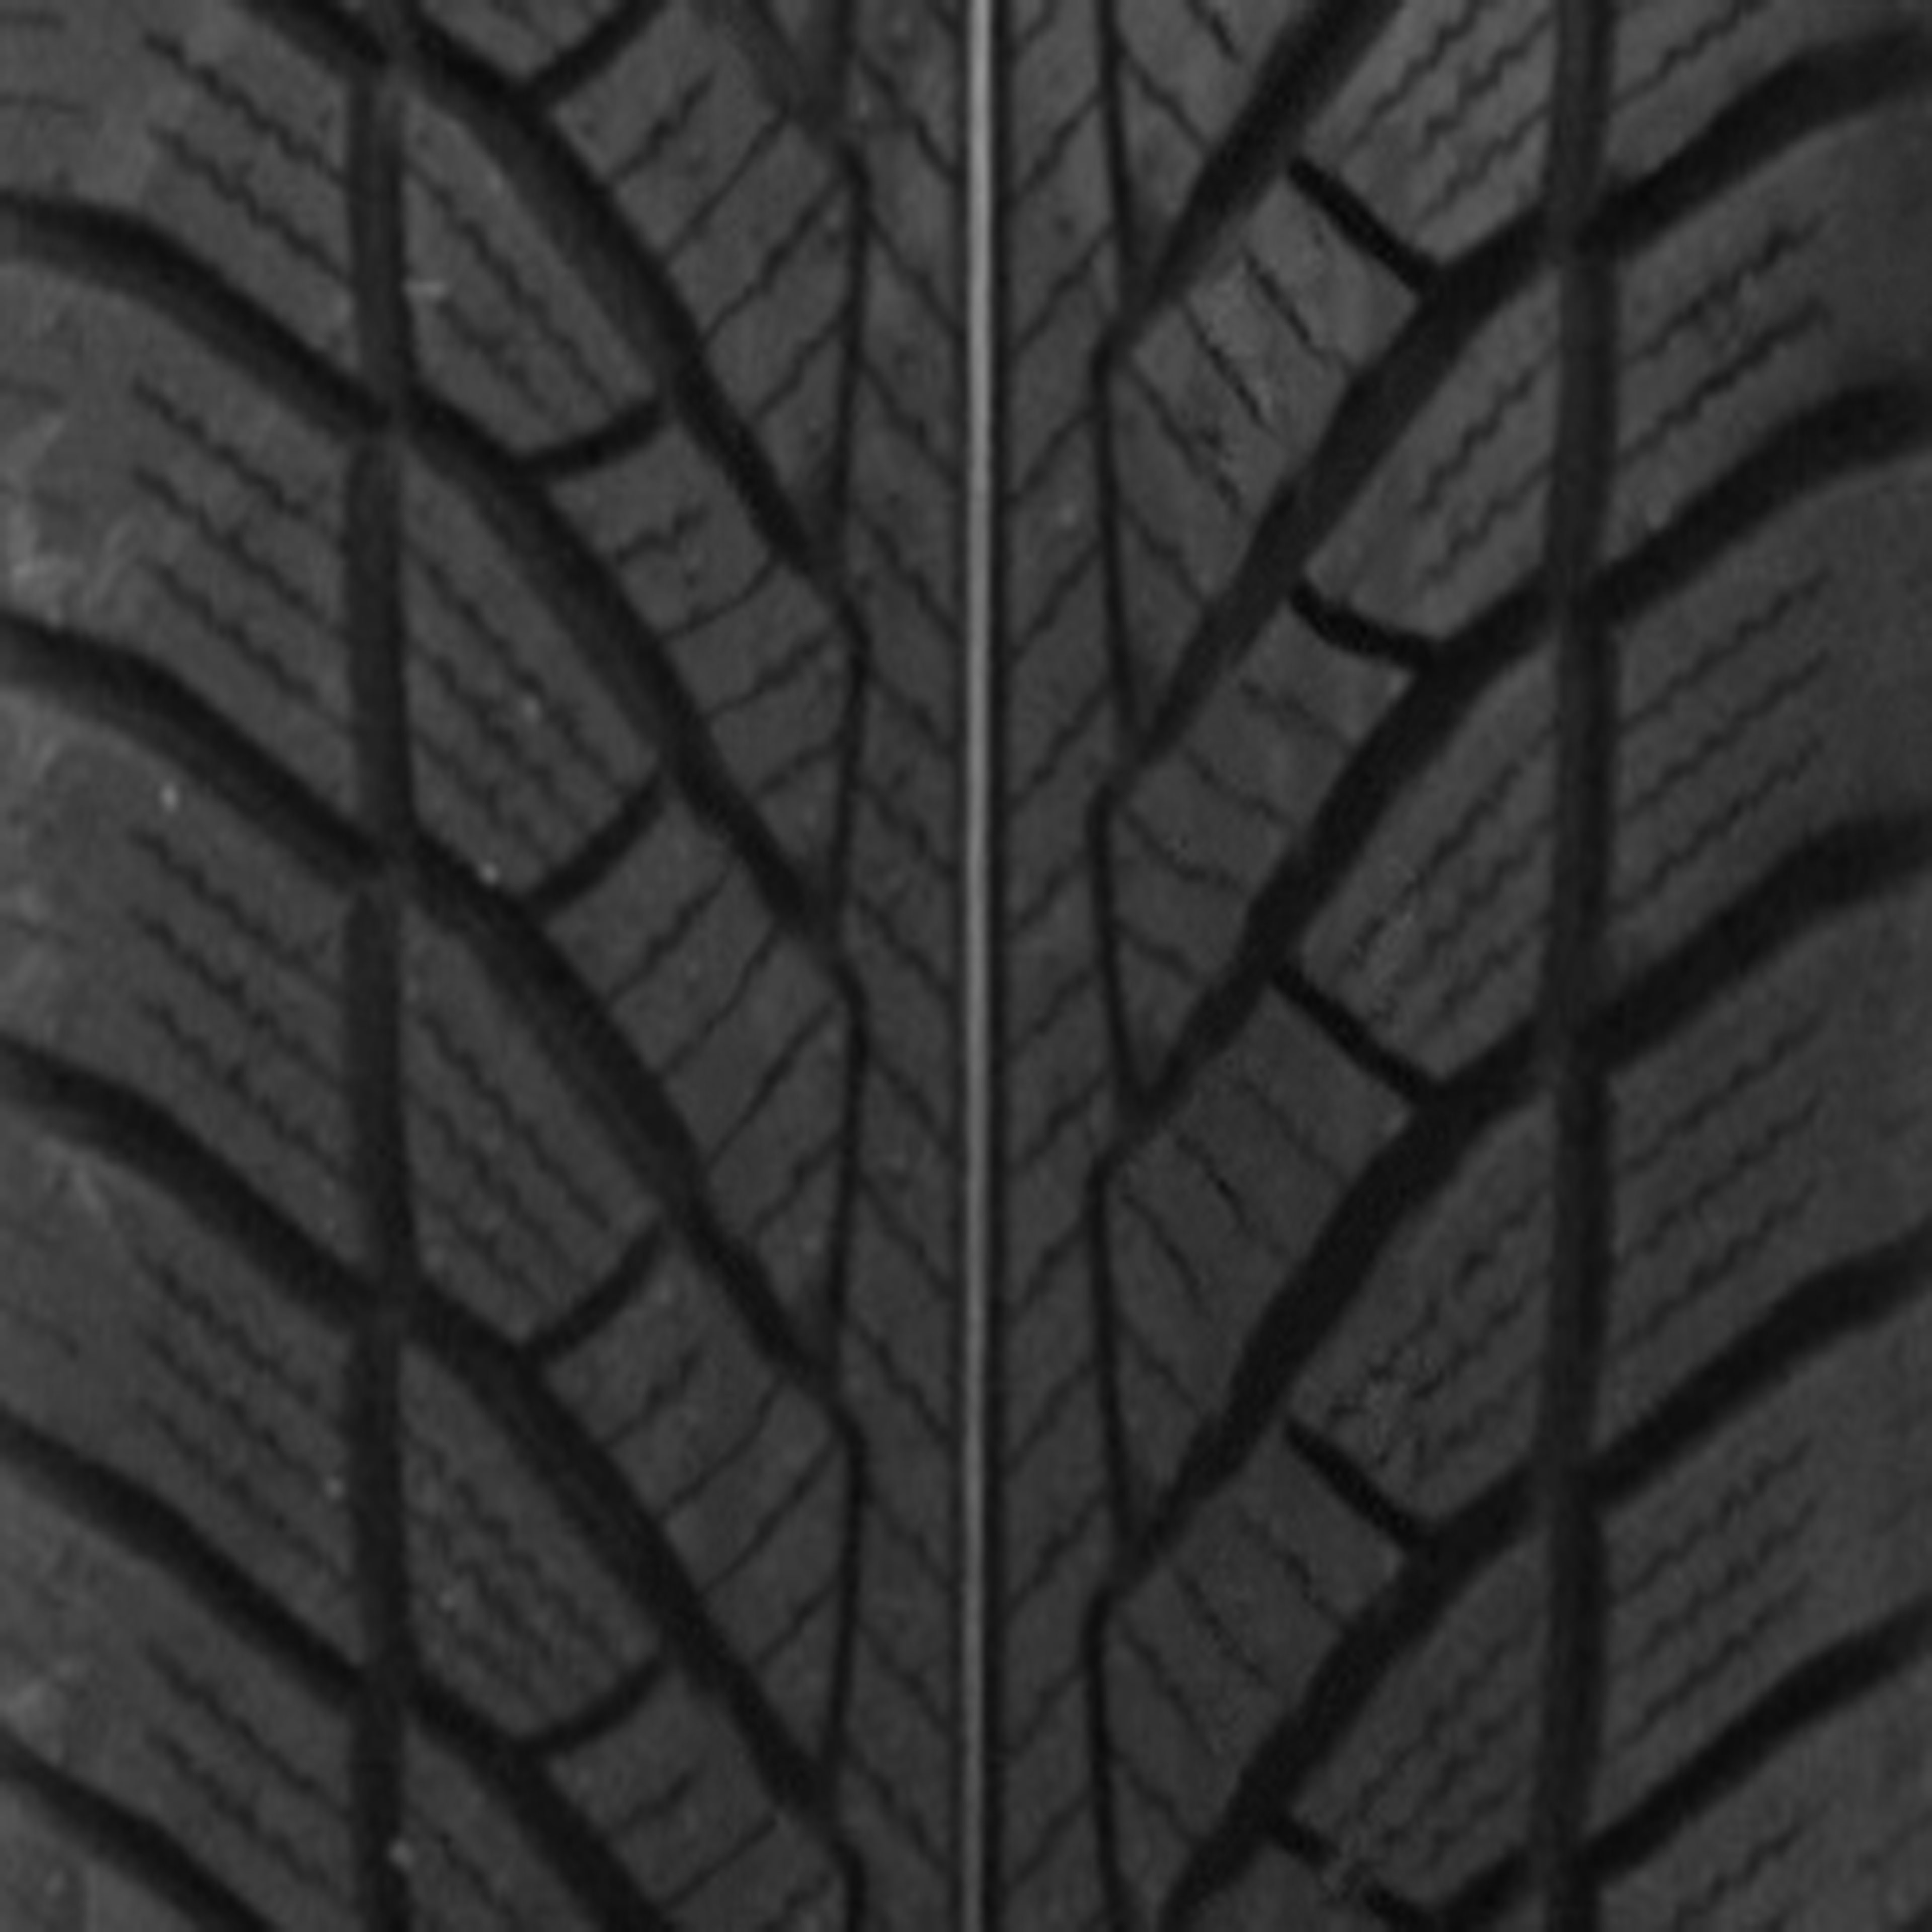 Buy Goodyear Ultra Grip SUV ROF Tires Online | SimpleTire